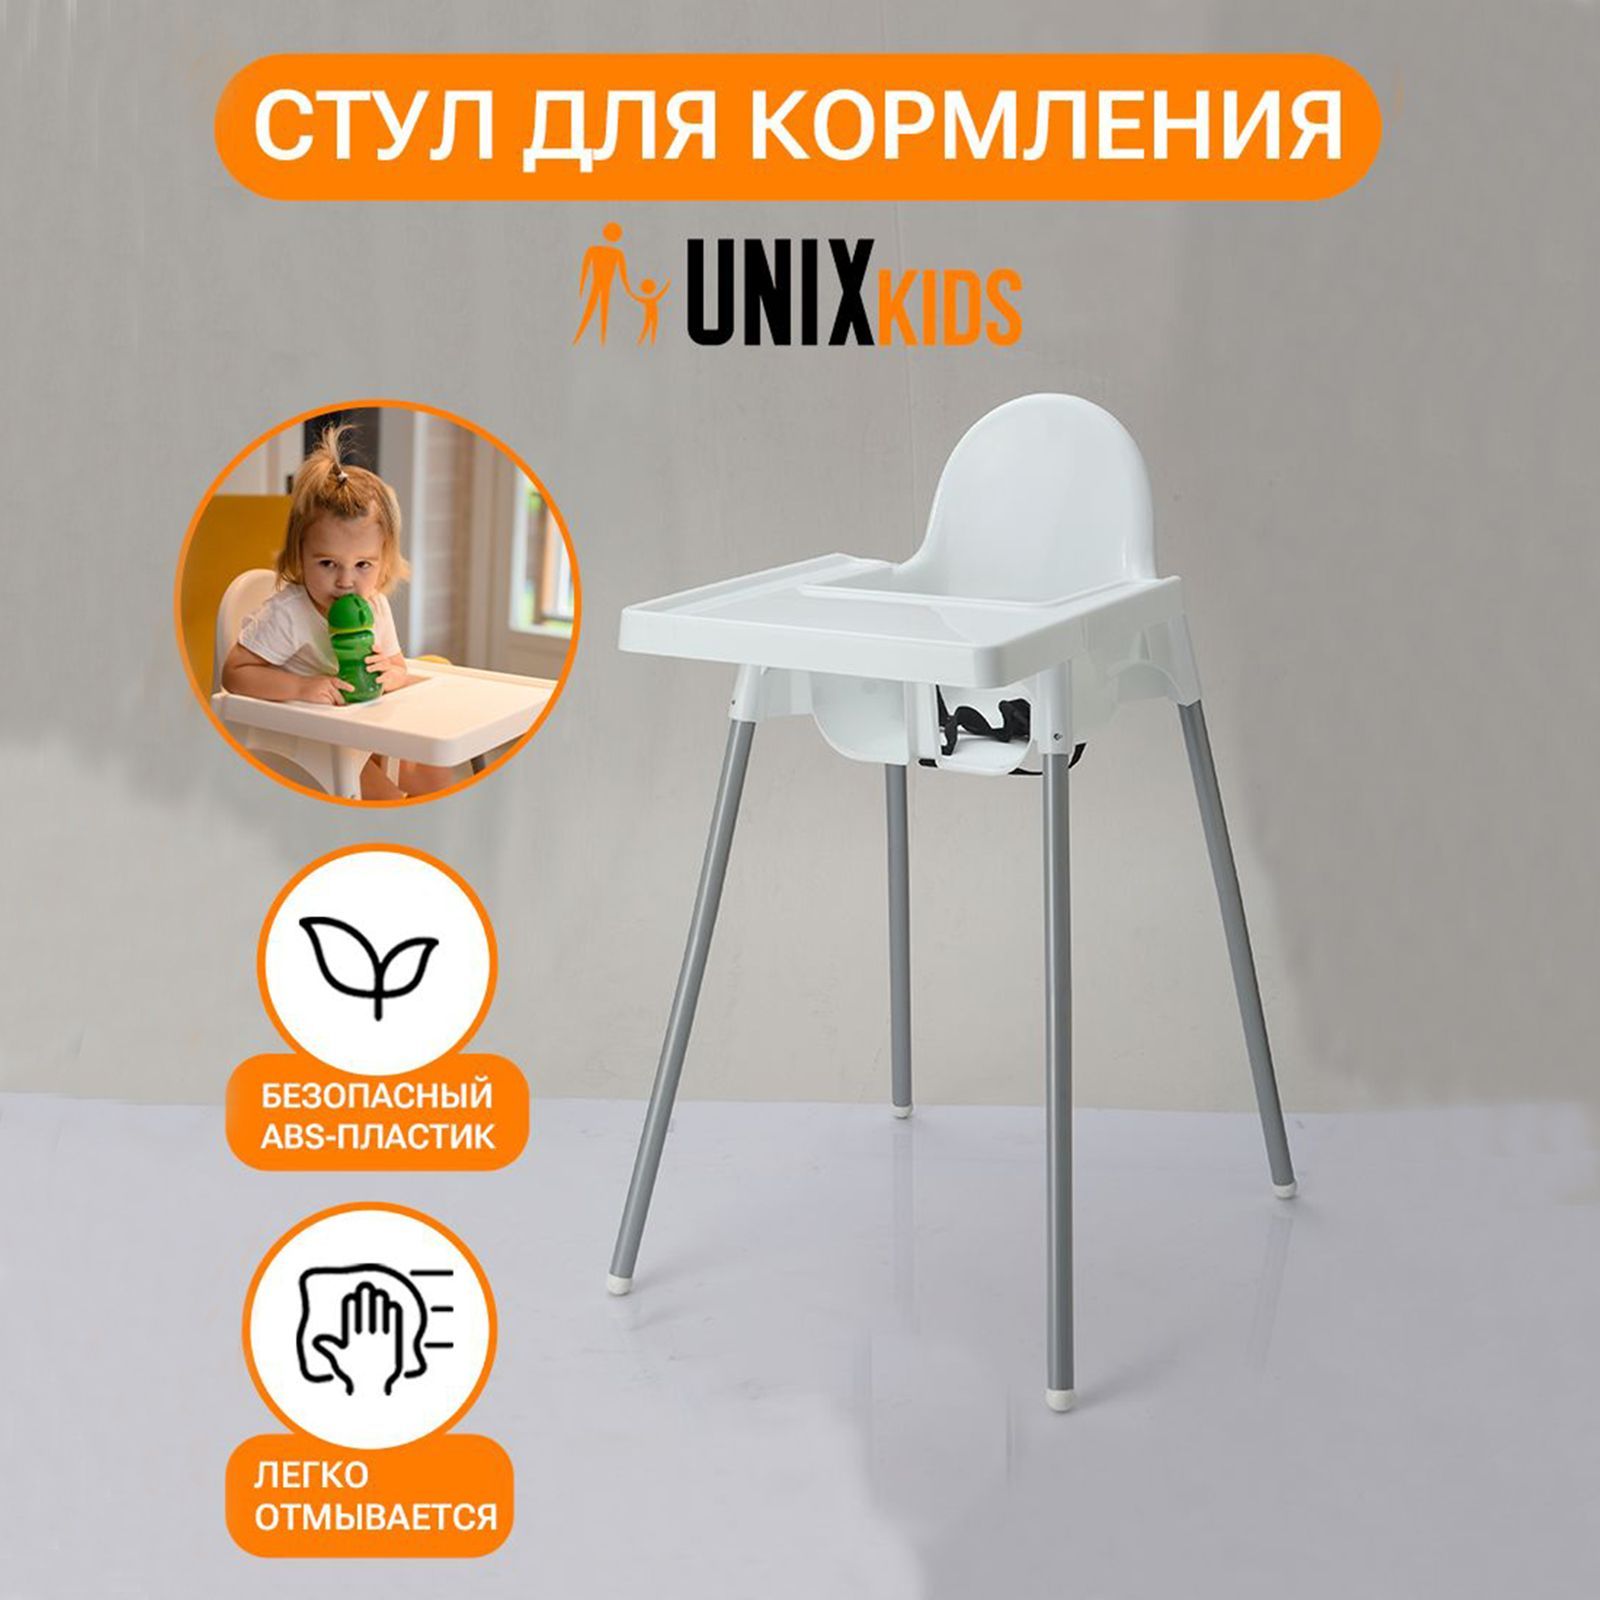 Стульчик для кормления UNIX Kids Fixed White - аналог ИКЕА, со столиком стульчик для кормления lunes green forest kids